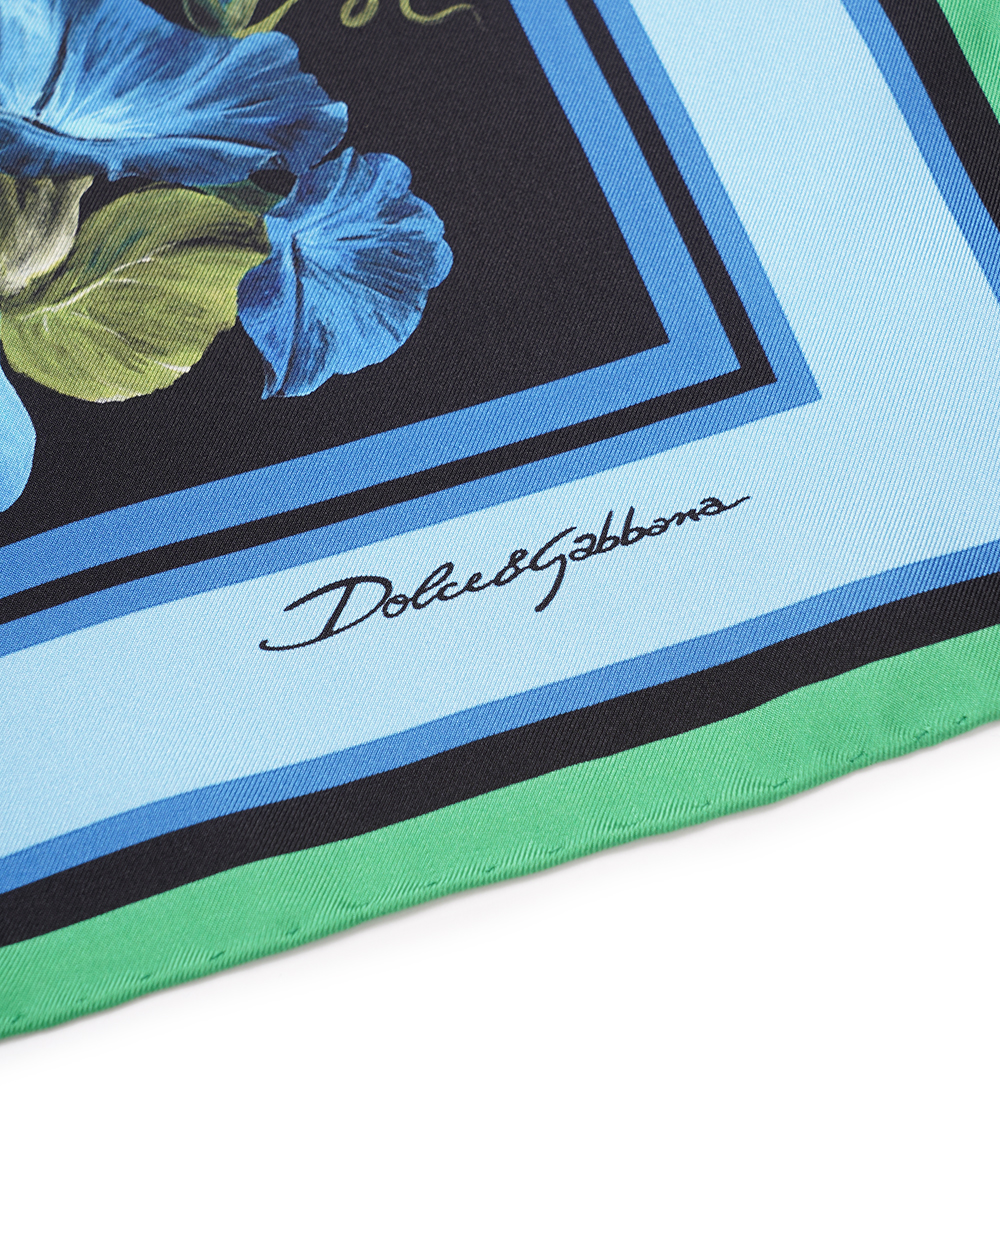 Платок Dolce&Gabbana FN092R-GDB7G, синий цвет • Купить в интернет-магазине Kameron